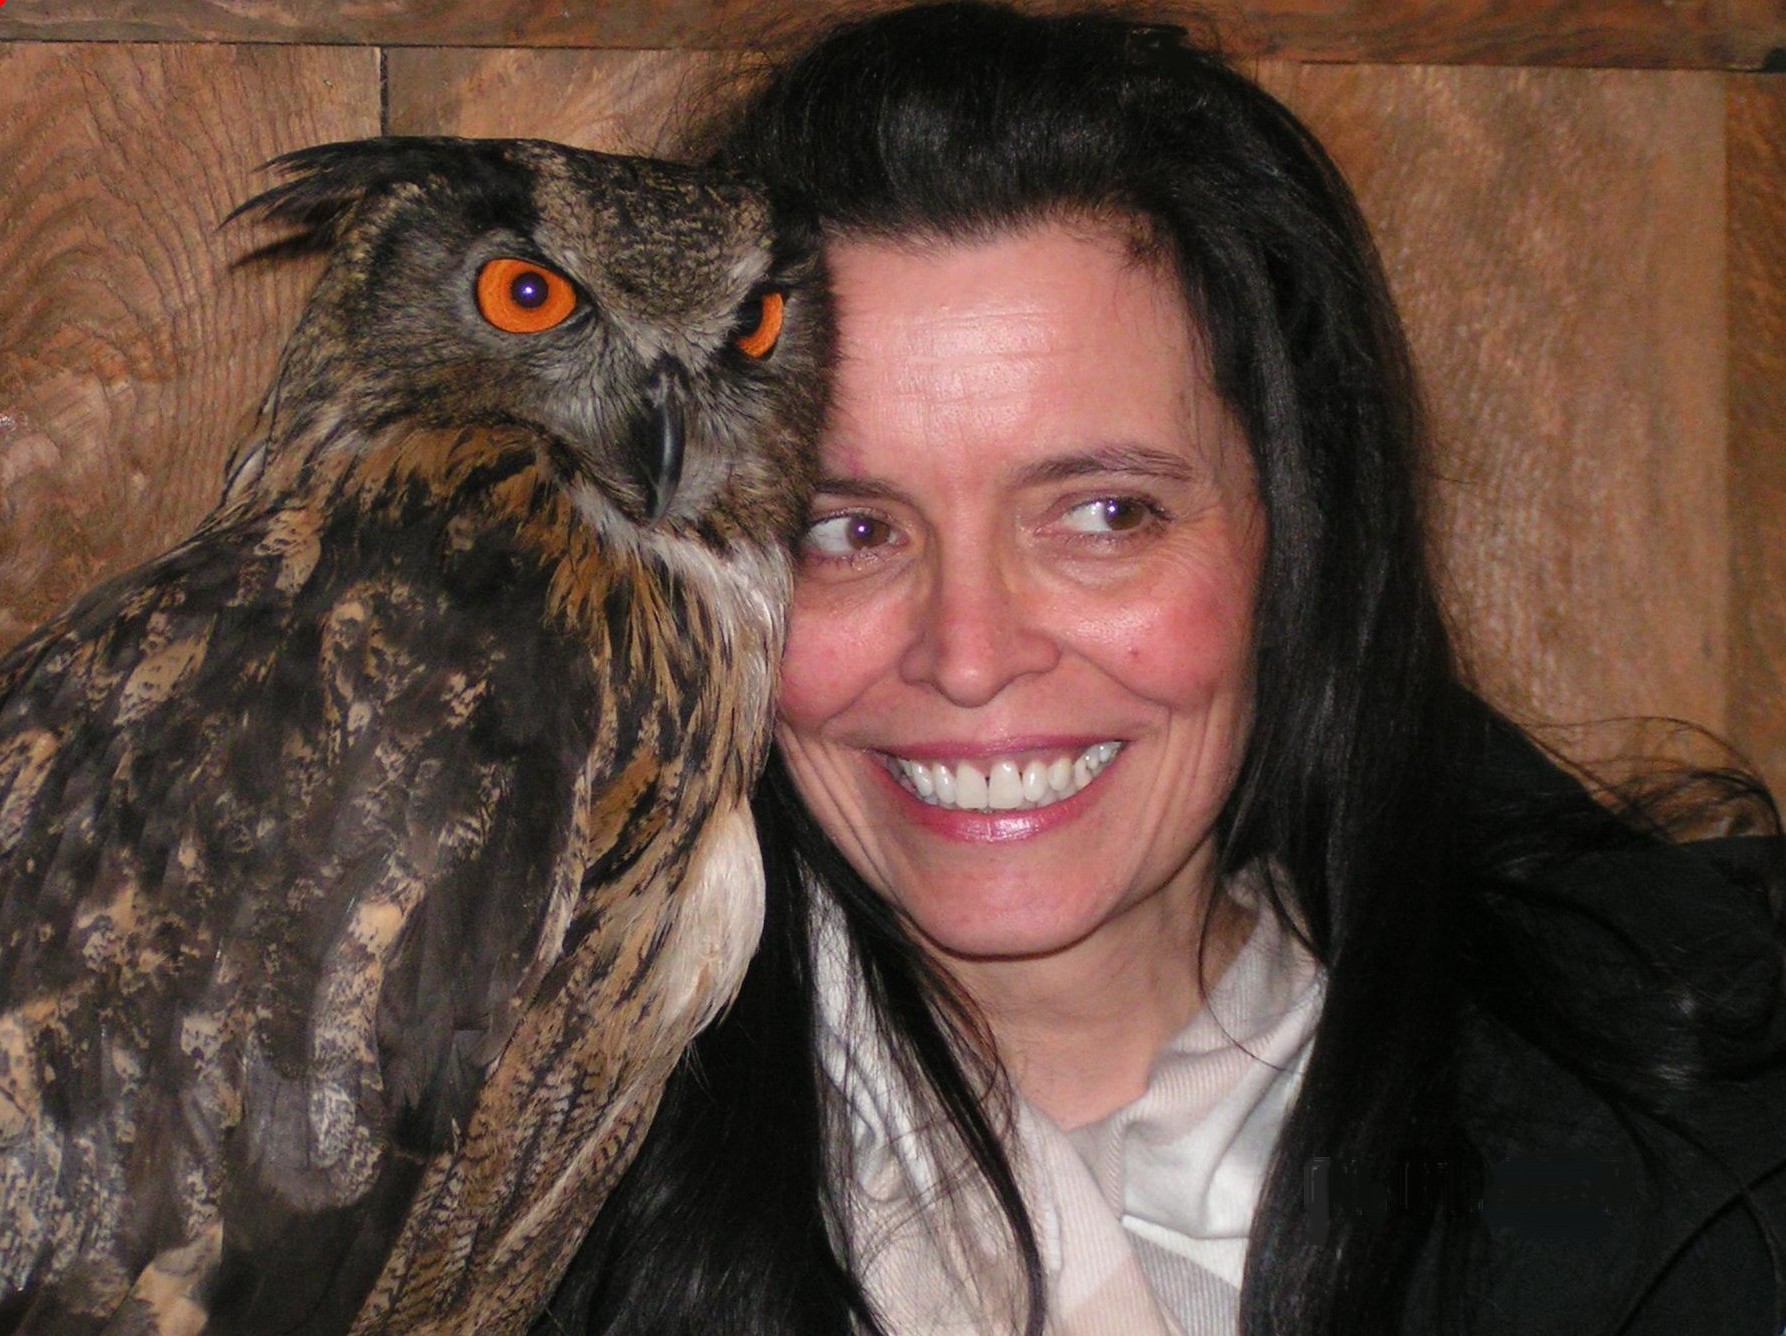 Owner Lynn with Harry Potter owl at the Sundance Film Festival